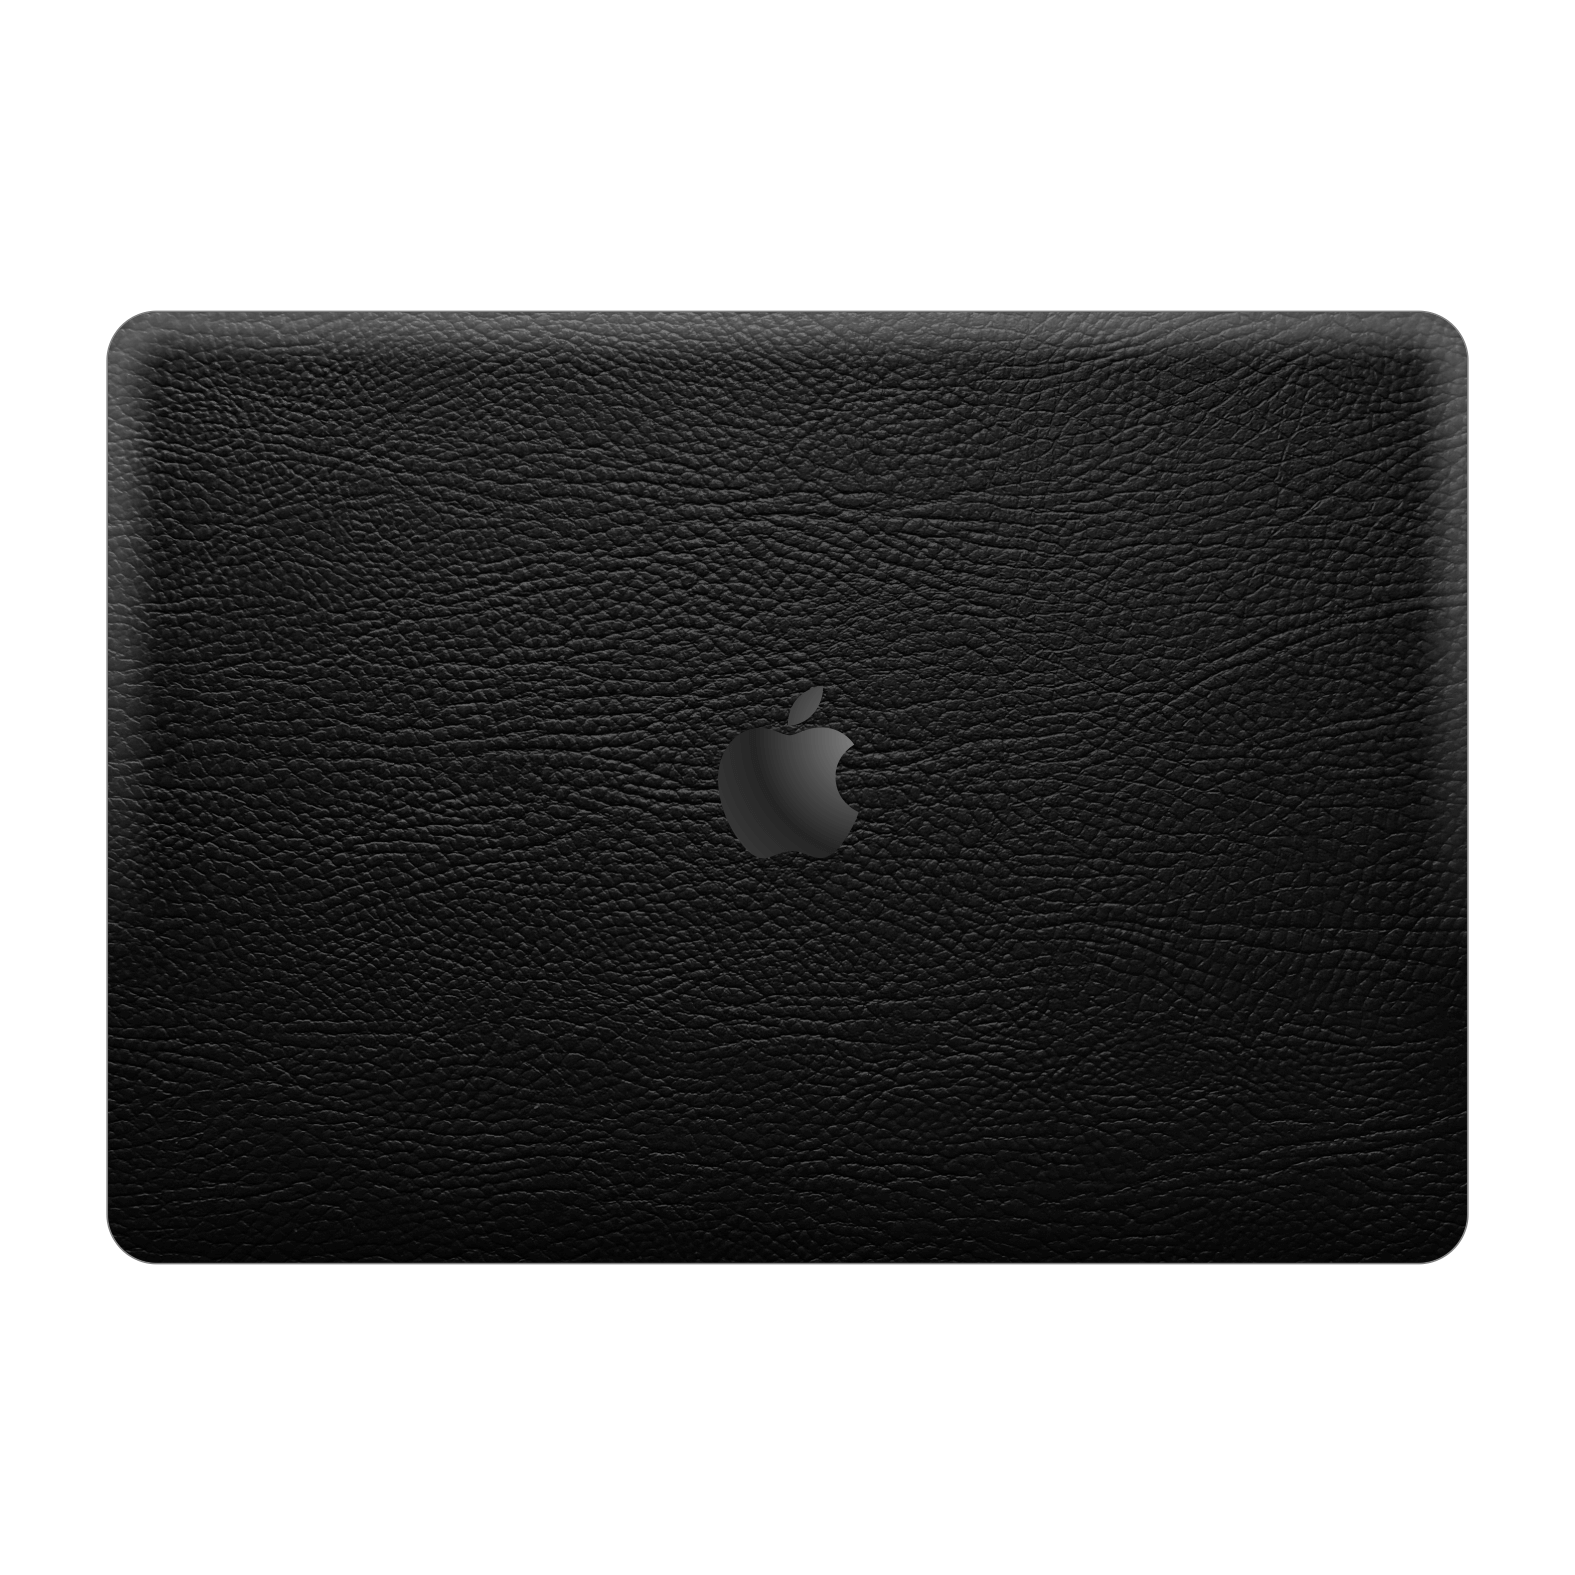 MacBook Air 13" (2020, M1) Luxuria BLACK LEATHER Riders Skin Wrap Sticker Decal Cover Protector by EasySkinz | EasySkinz.com